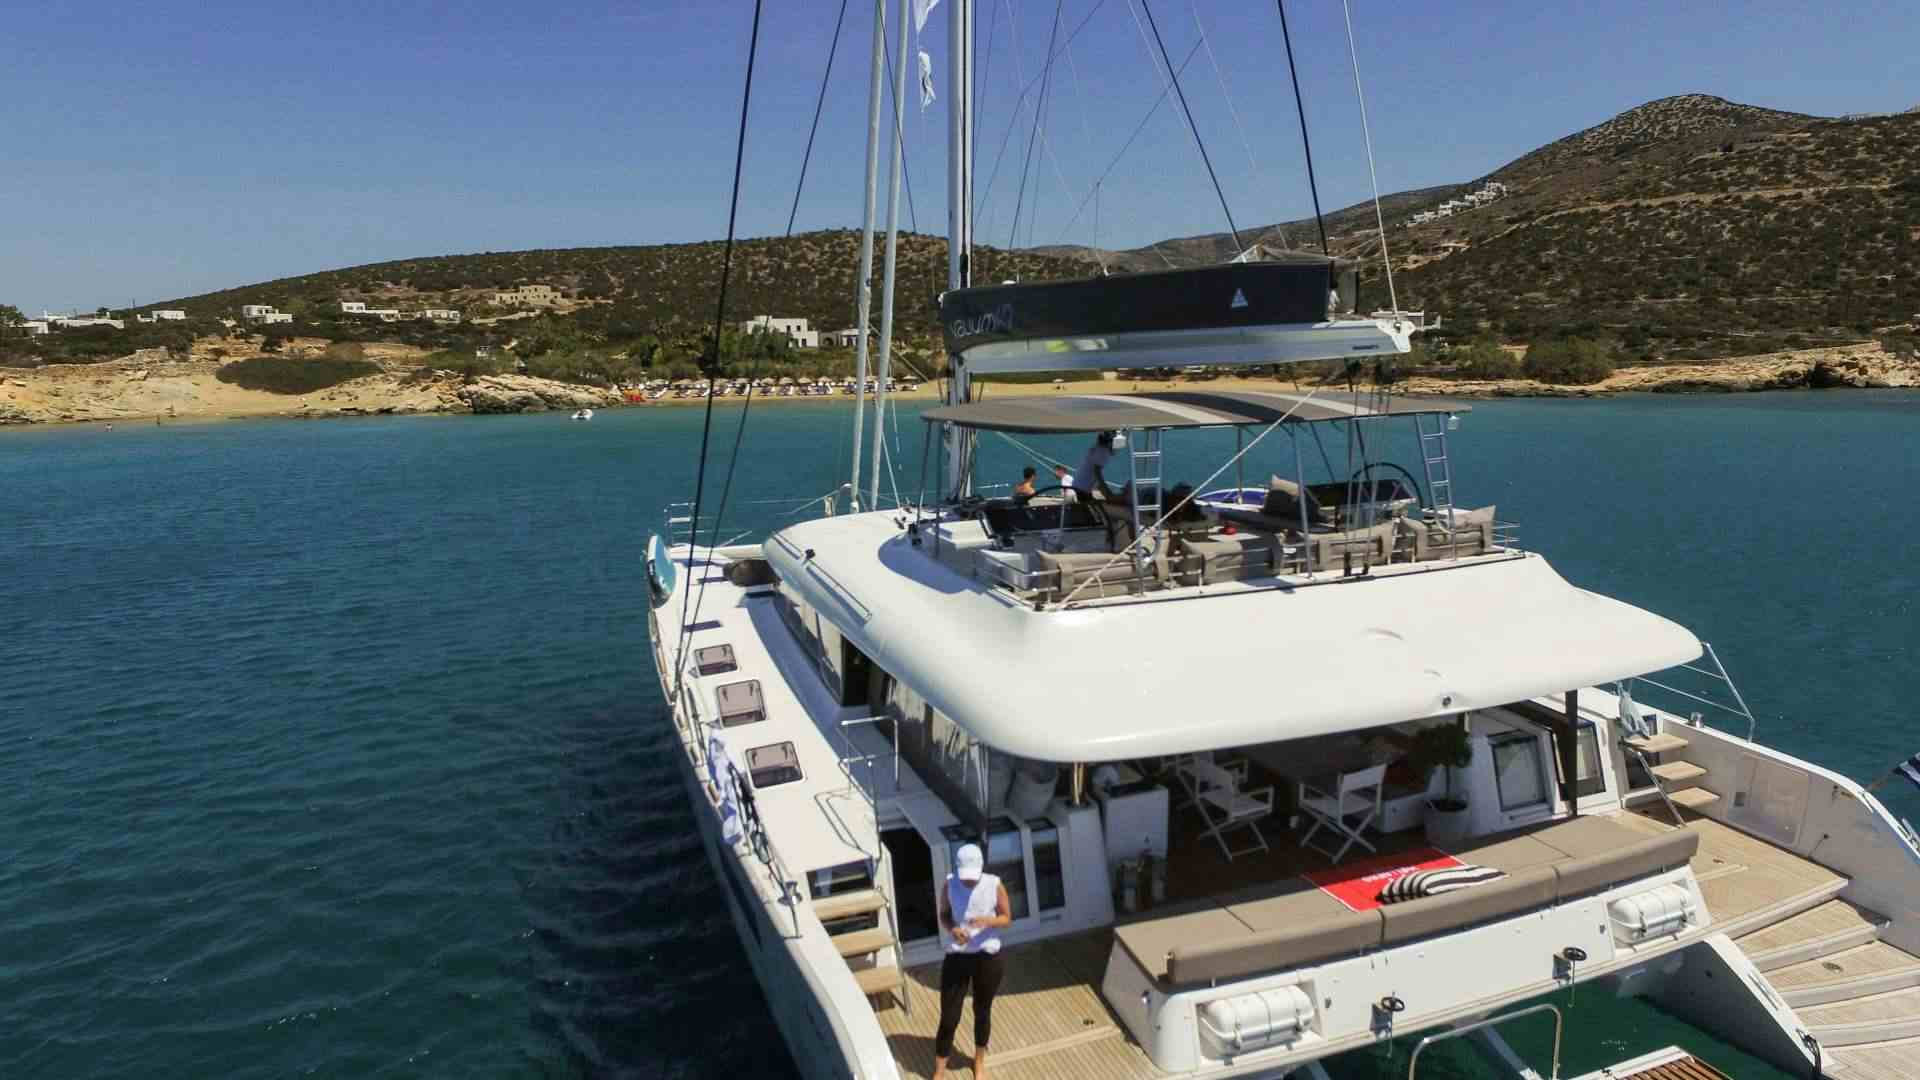 valium62 - Yacht Charter Birmingham & Boat hire in Greece 1